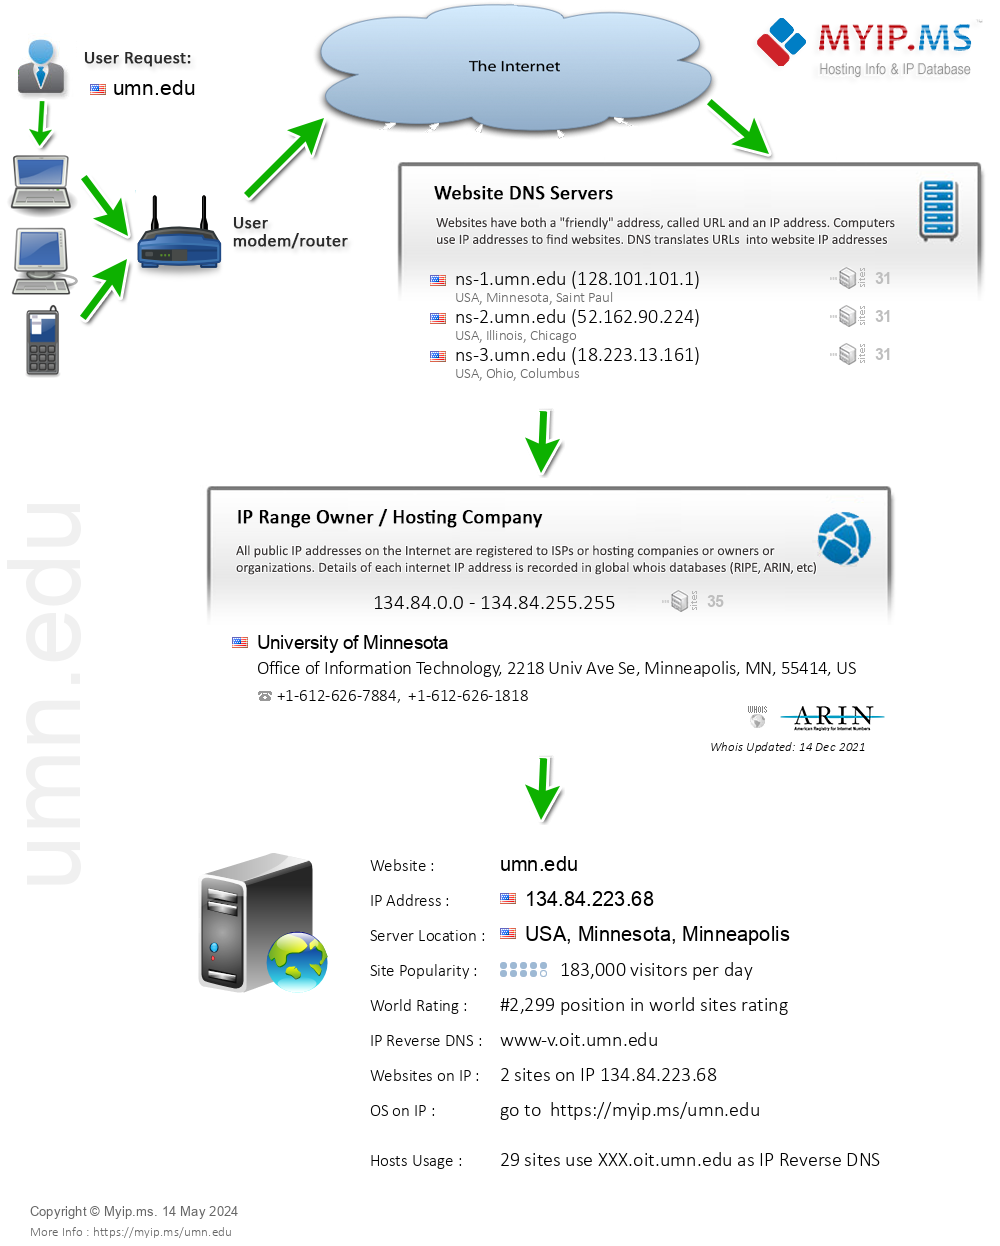 Umn.edu - Website Hosting Visual IP Diagram